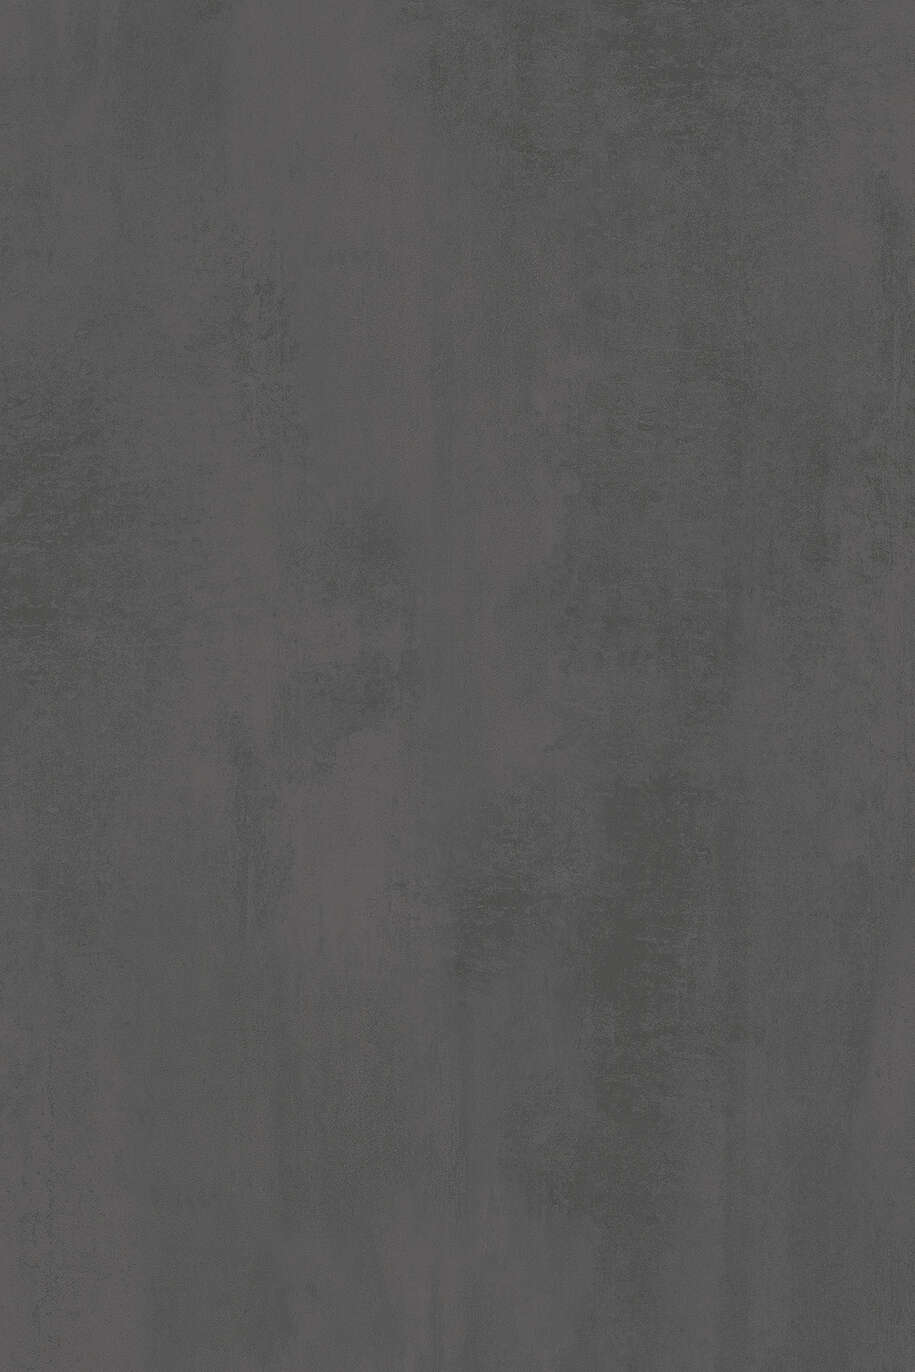 PD KR K201 RS Dark Grey Concrete 38 x 600 x 4100 mm 